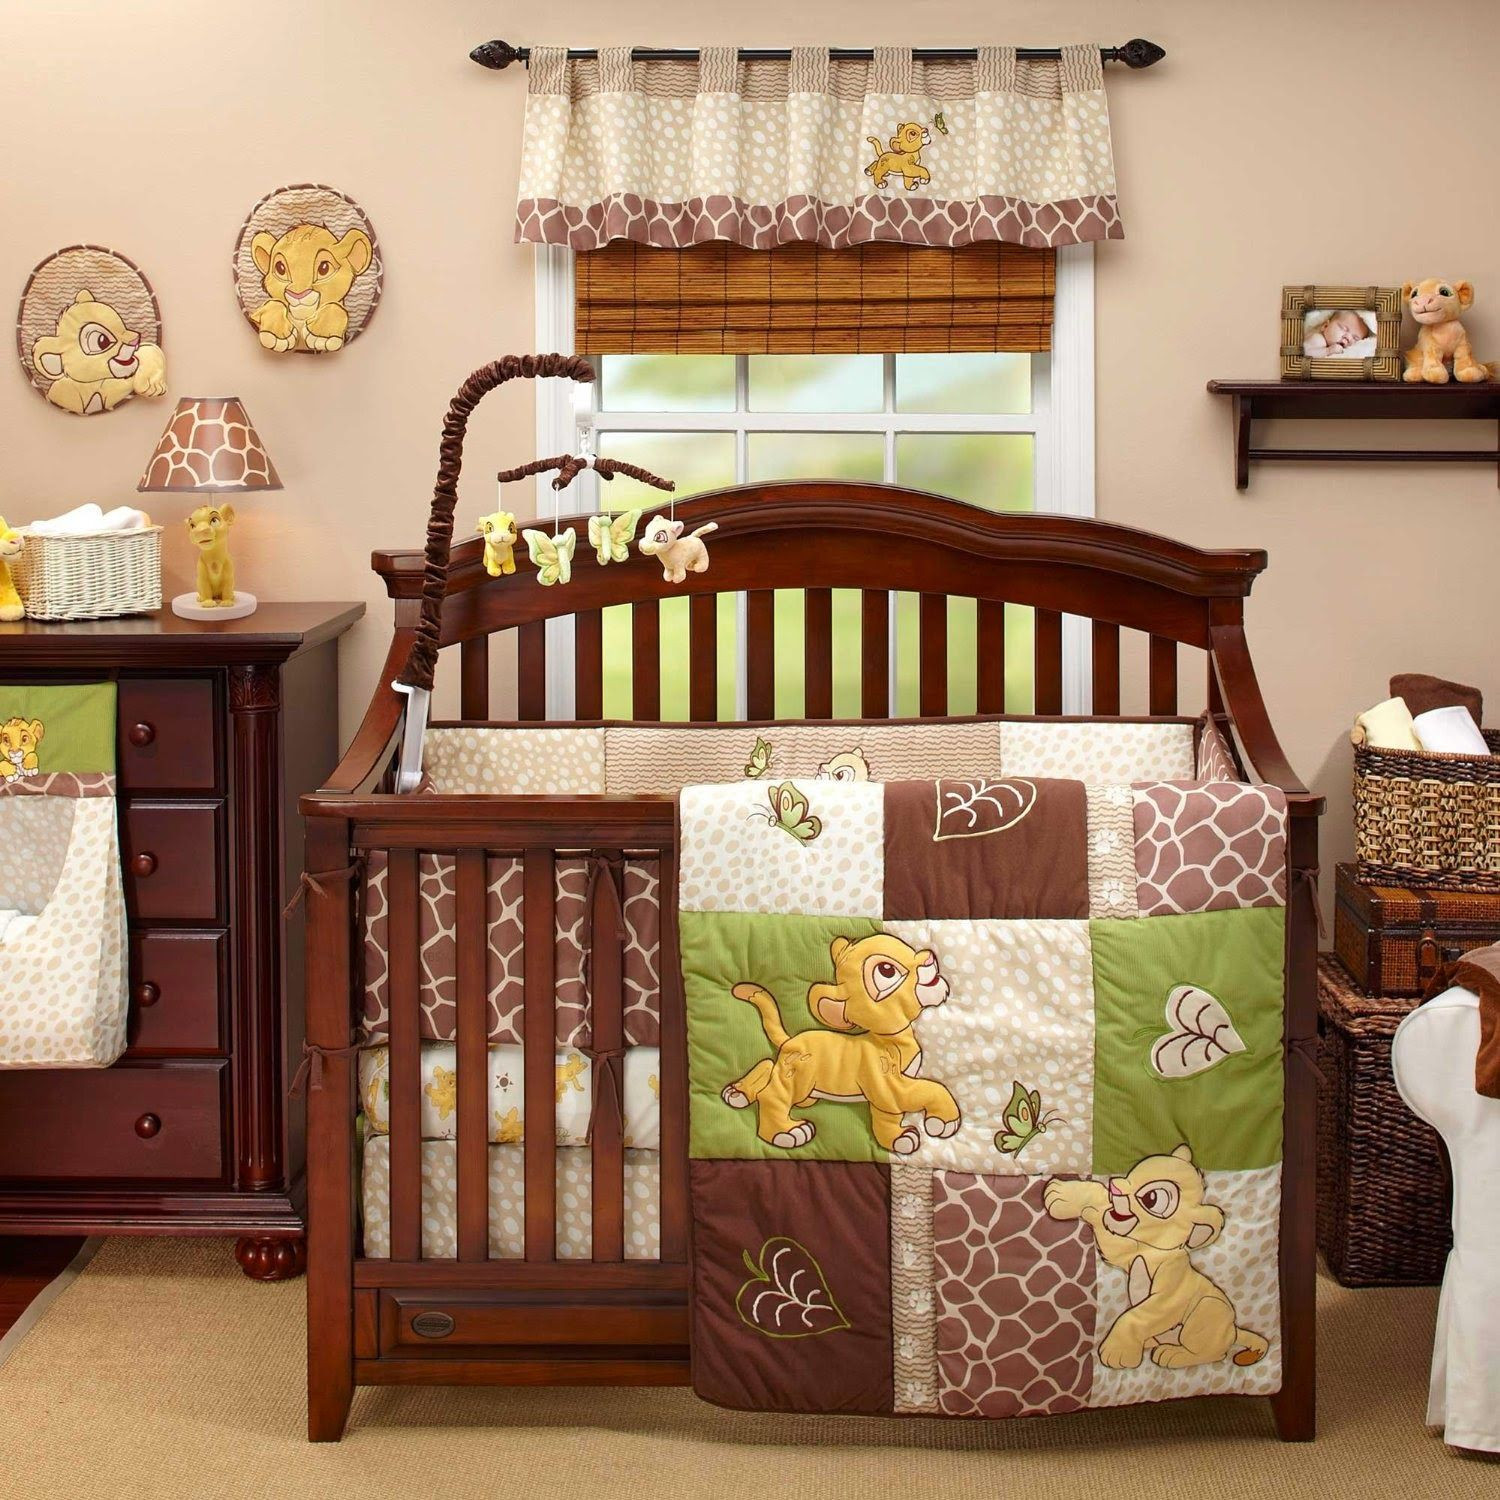 Lion King Baby Room Decor
 Lion King Baby Nursery Decor and Crib Sets